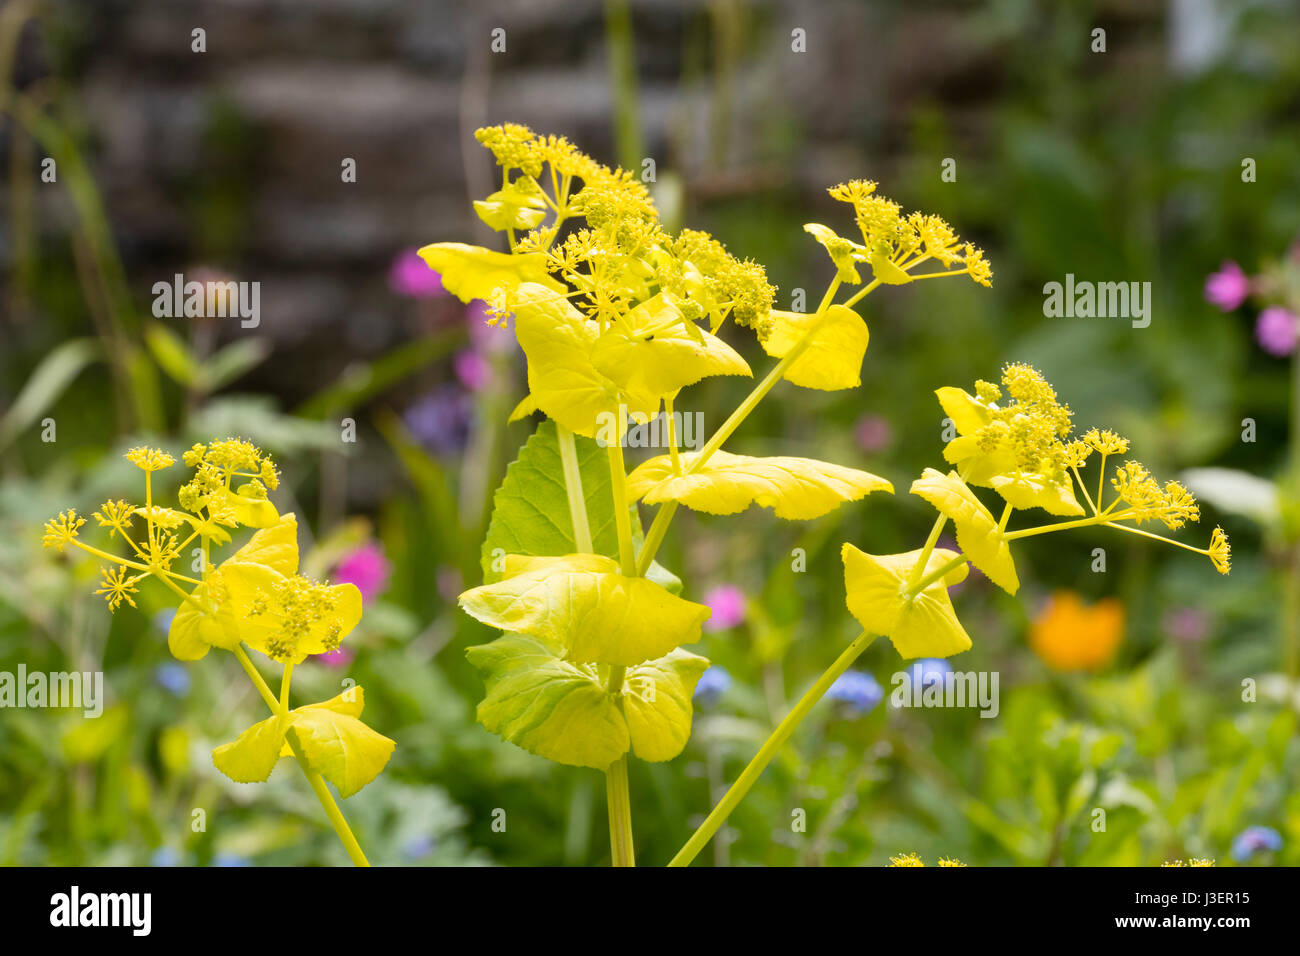 Yellow bracts and flowers of the hardy biennial, Smyrnium perfoliatum Stock Photo